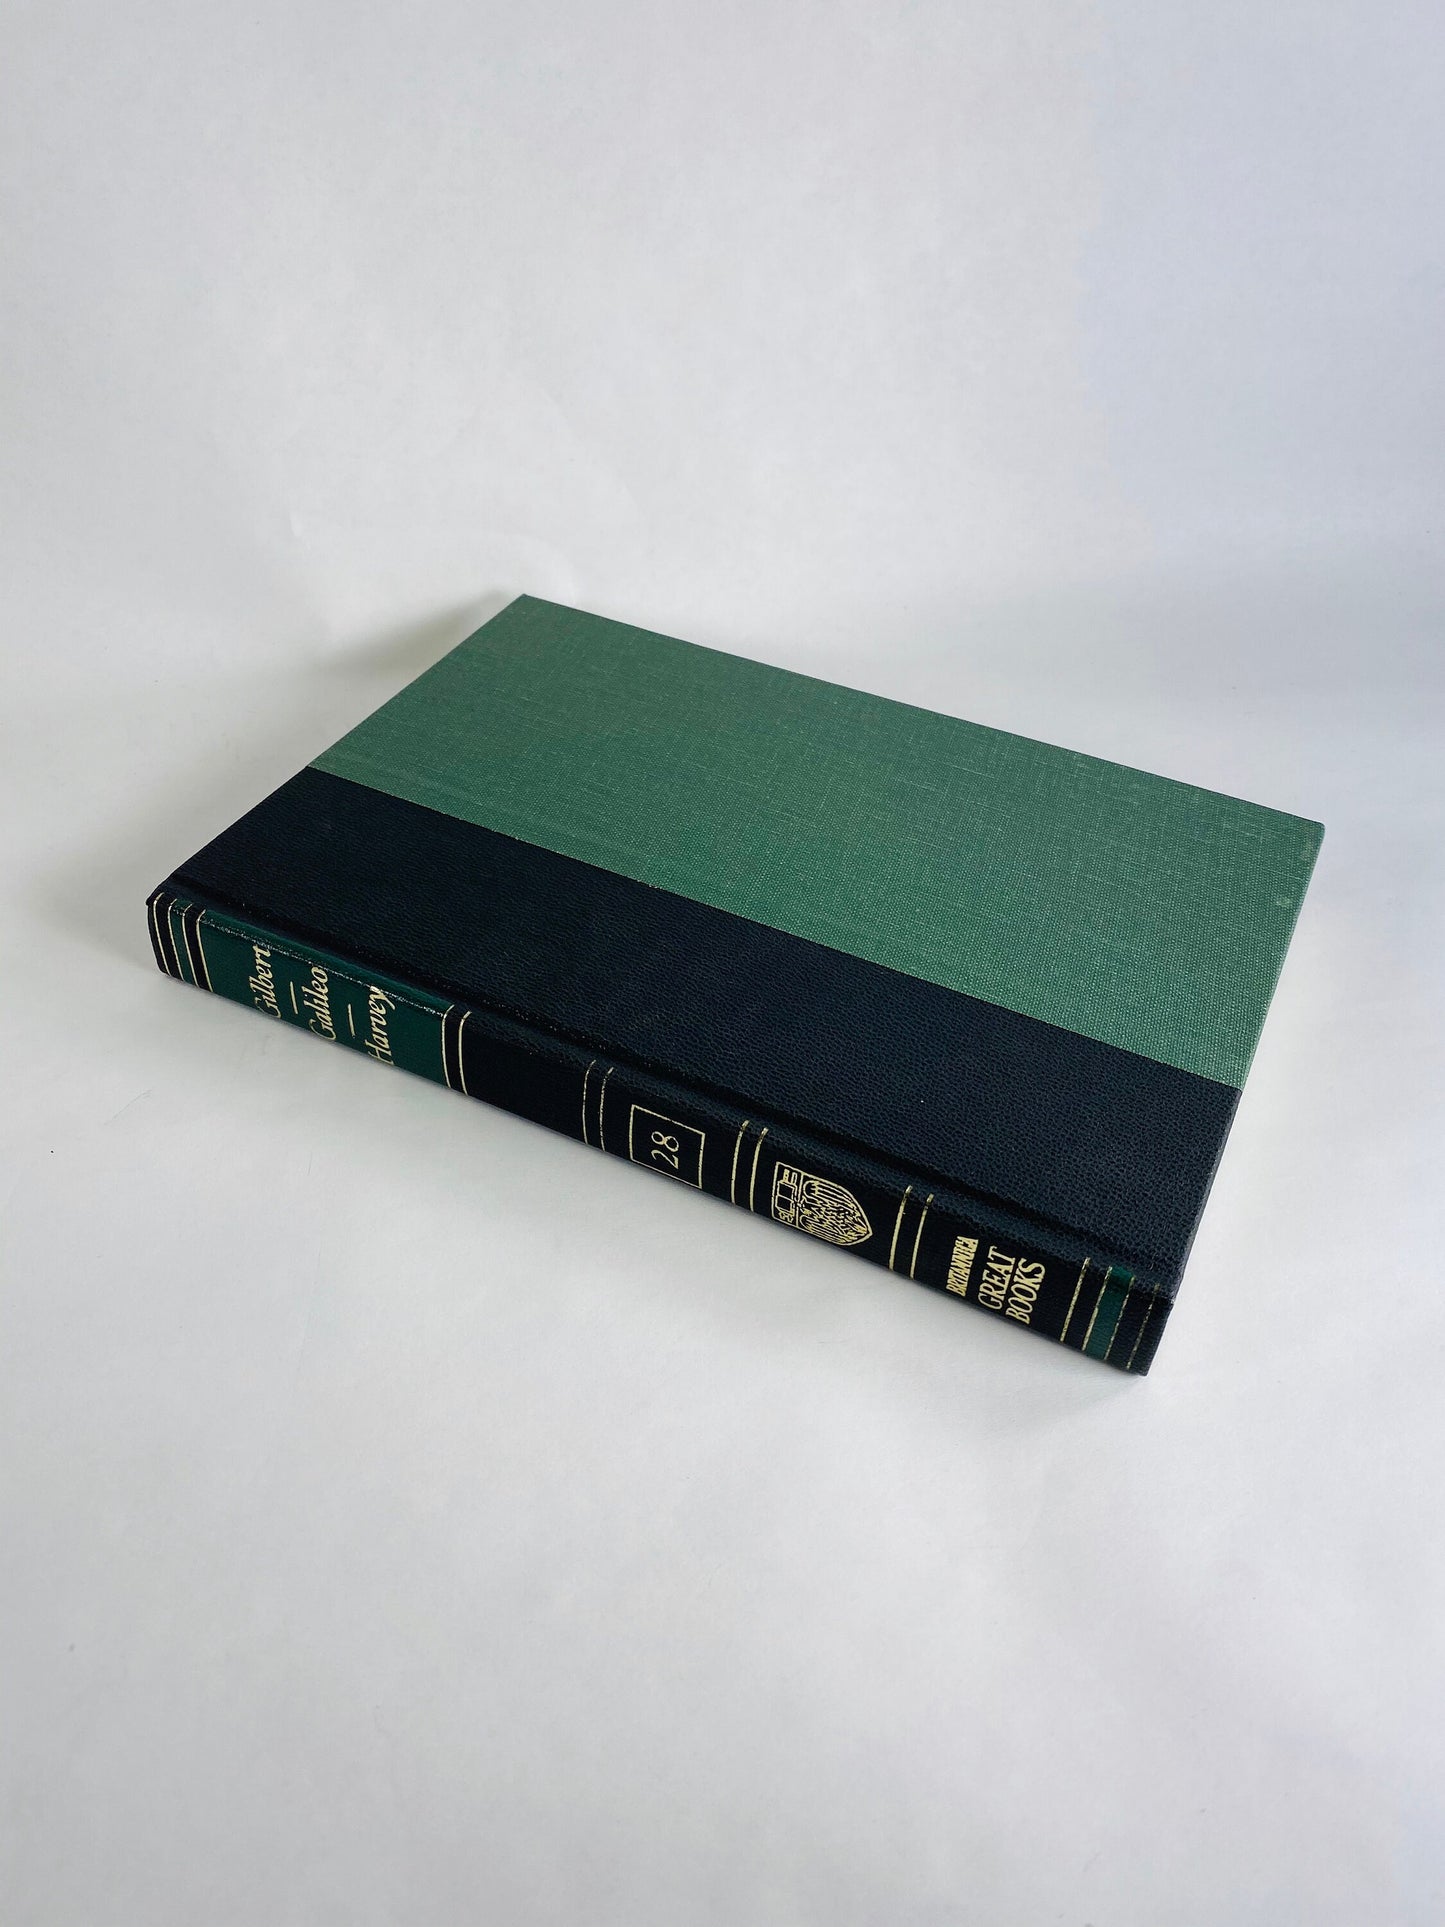 Emerald green & black vintage books Darwin Galileo Hippocrates Euclid Archimedes Newton Britannica Great Books Staging bookshelf decor 1986